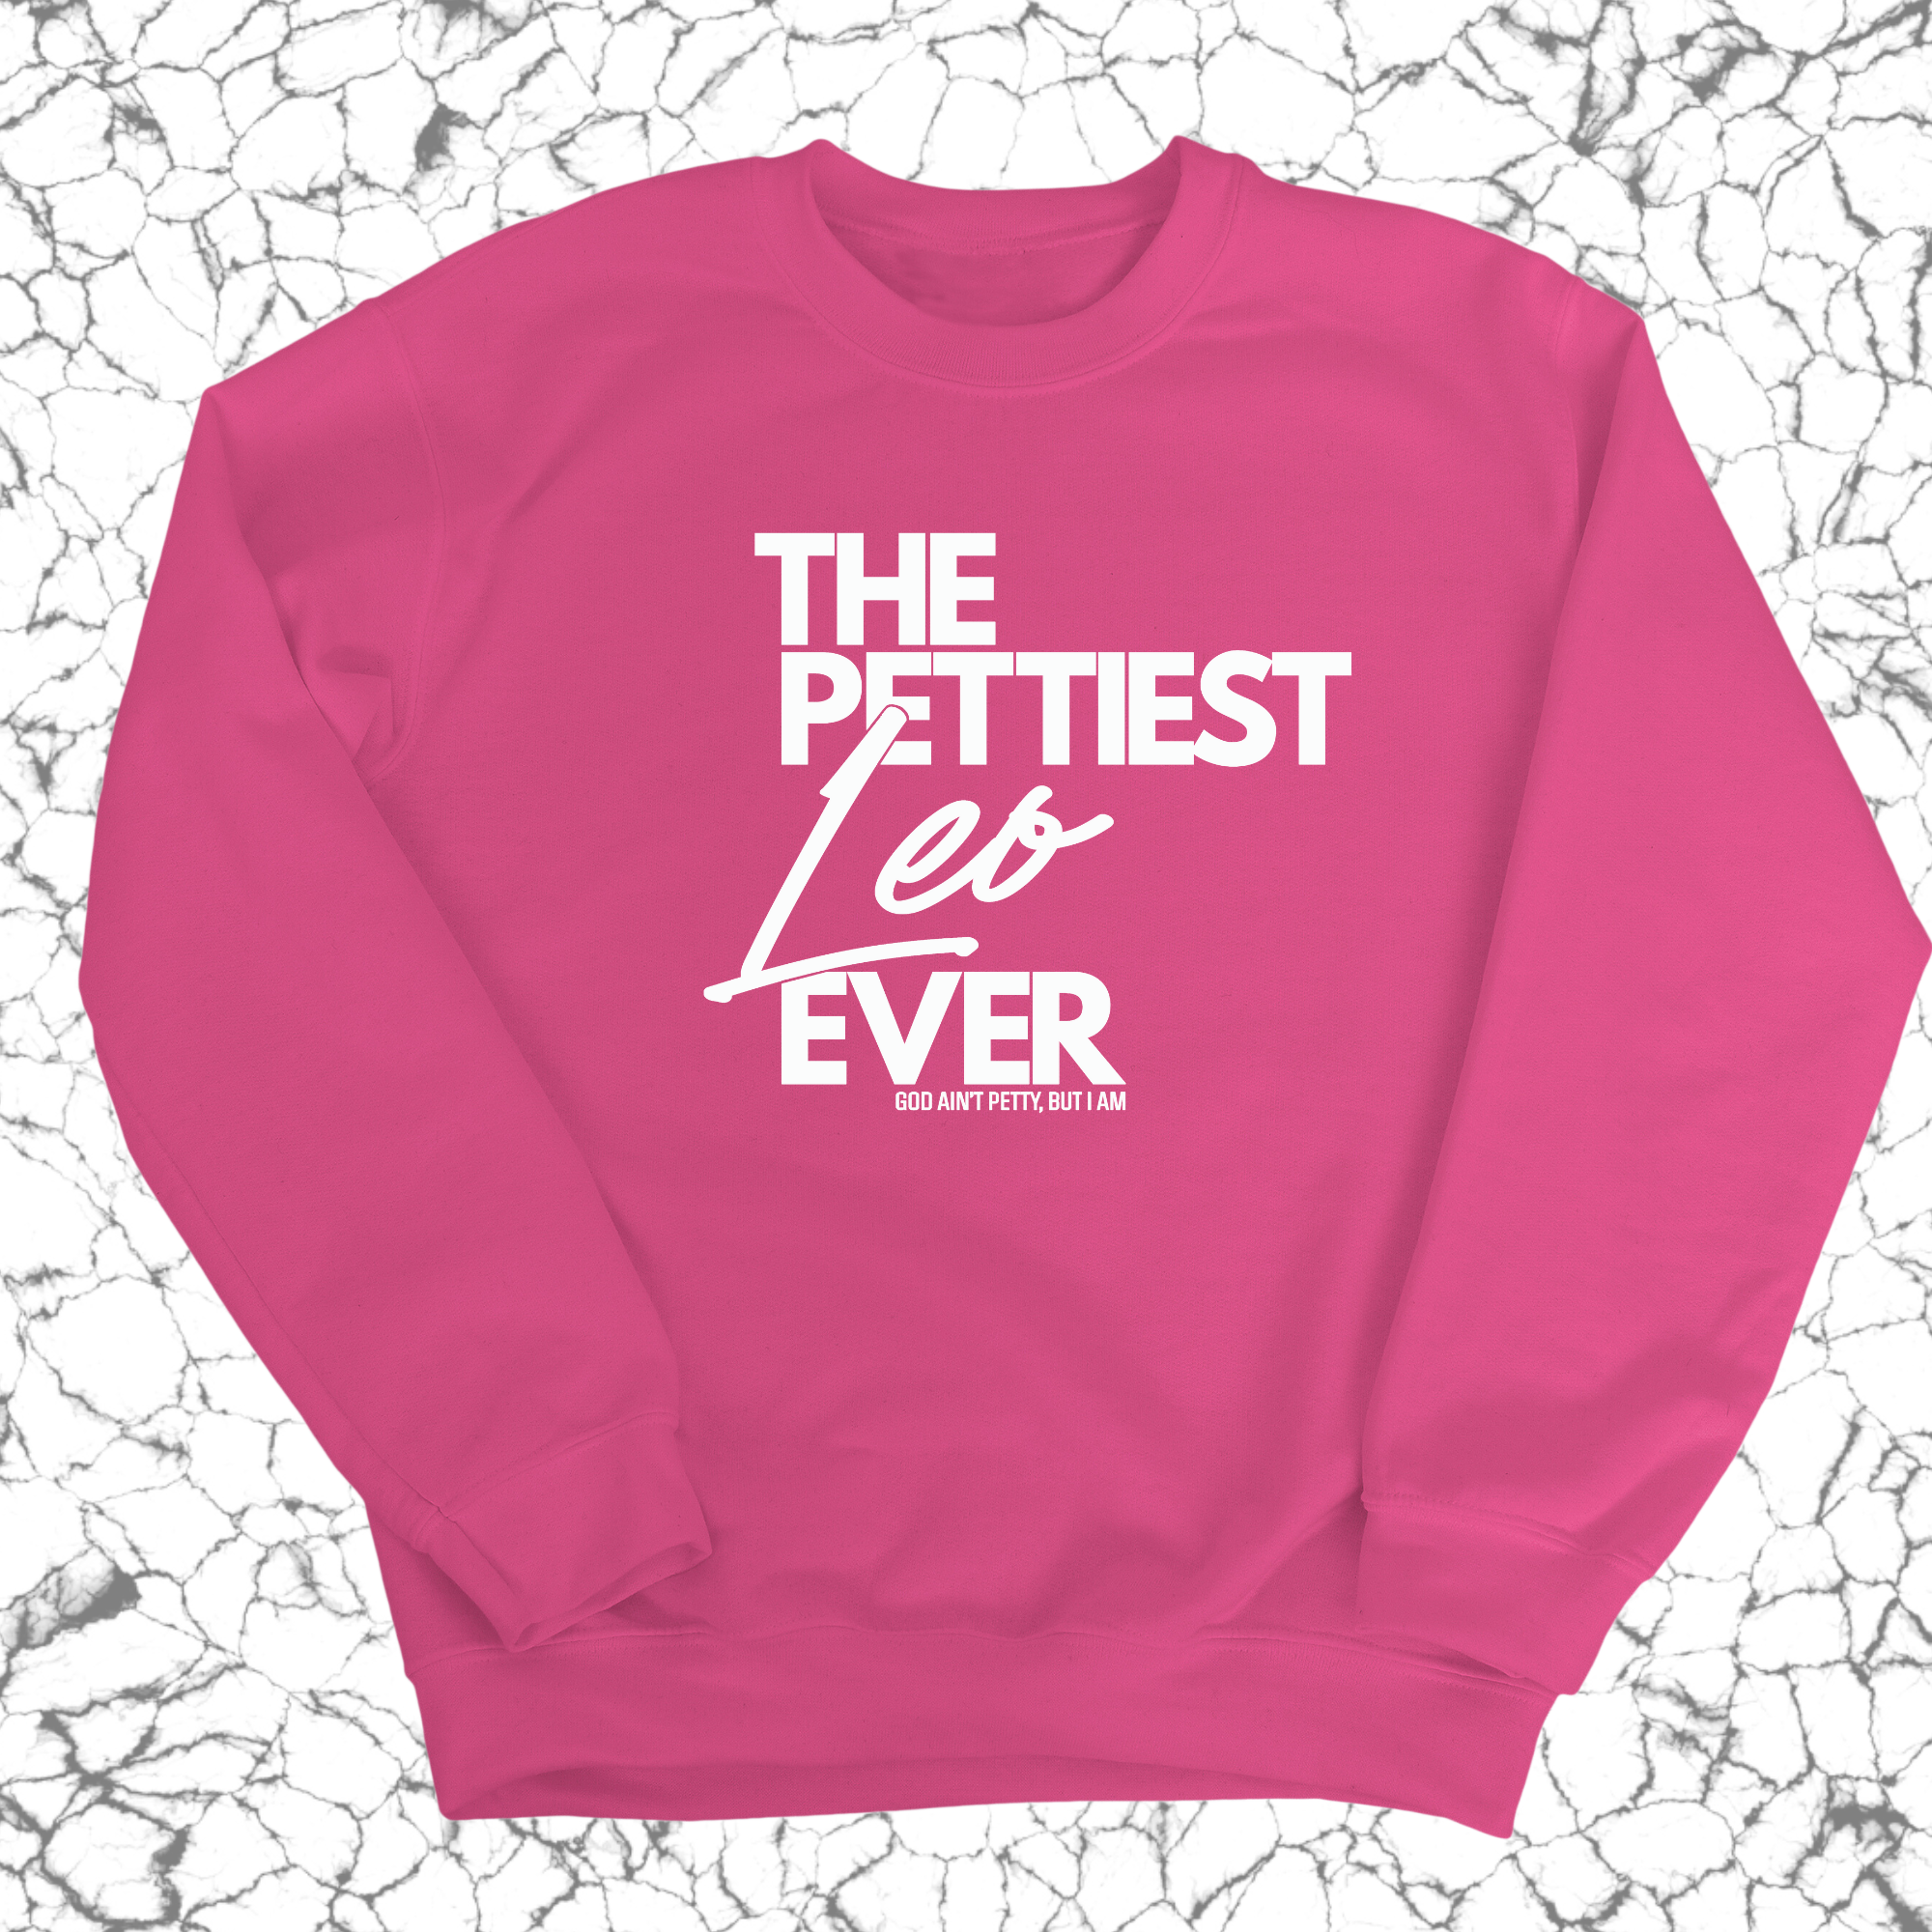 The Pettiest Leo Ever Unisex Sweatshirt-Sweatshirt-The Original God Ain't Petty But I Am